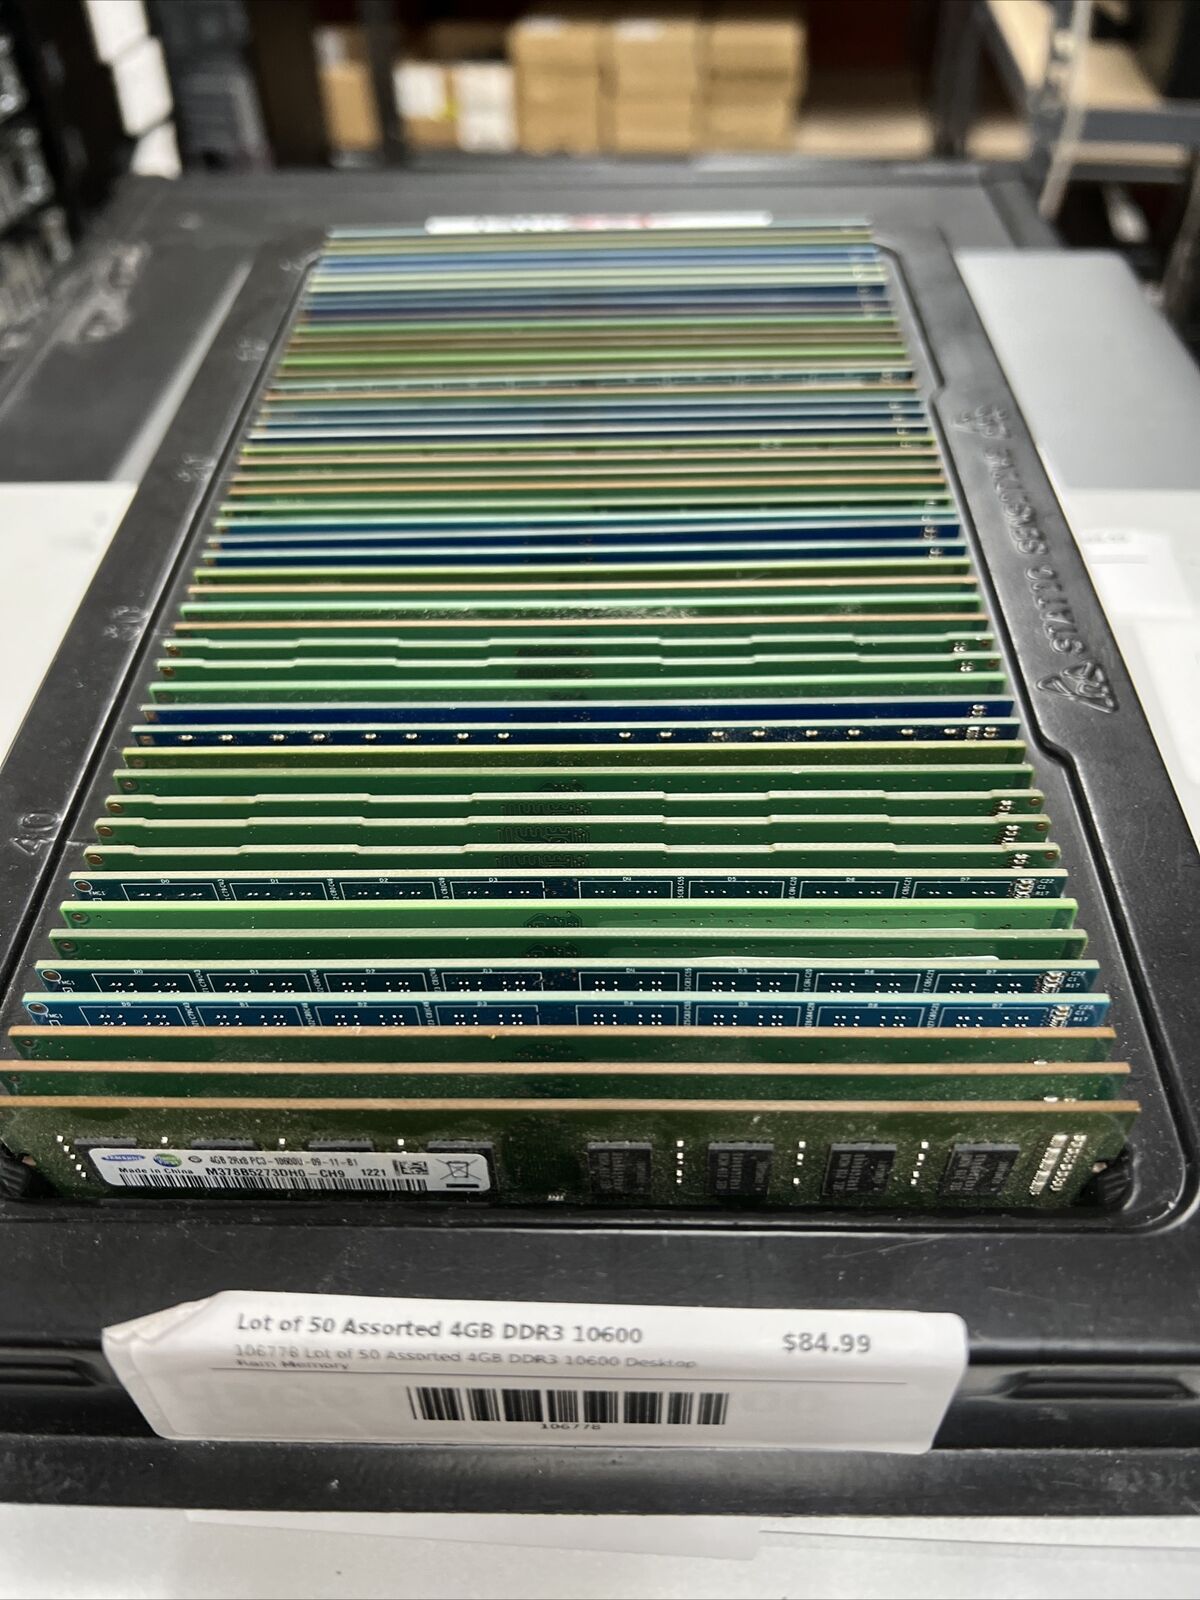 Lot Of 50 4GB PC3-10600 DDR3 Desktop RAM Sticks Mixed Manufacturer